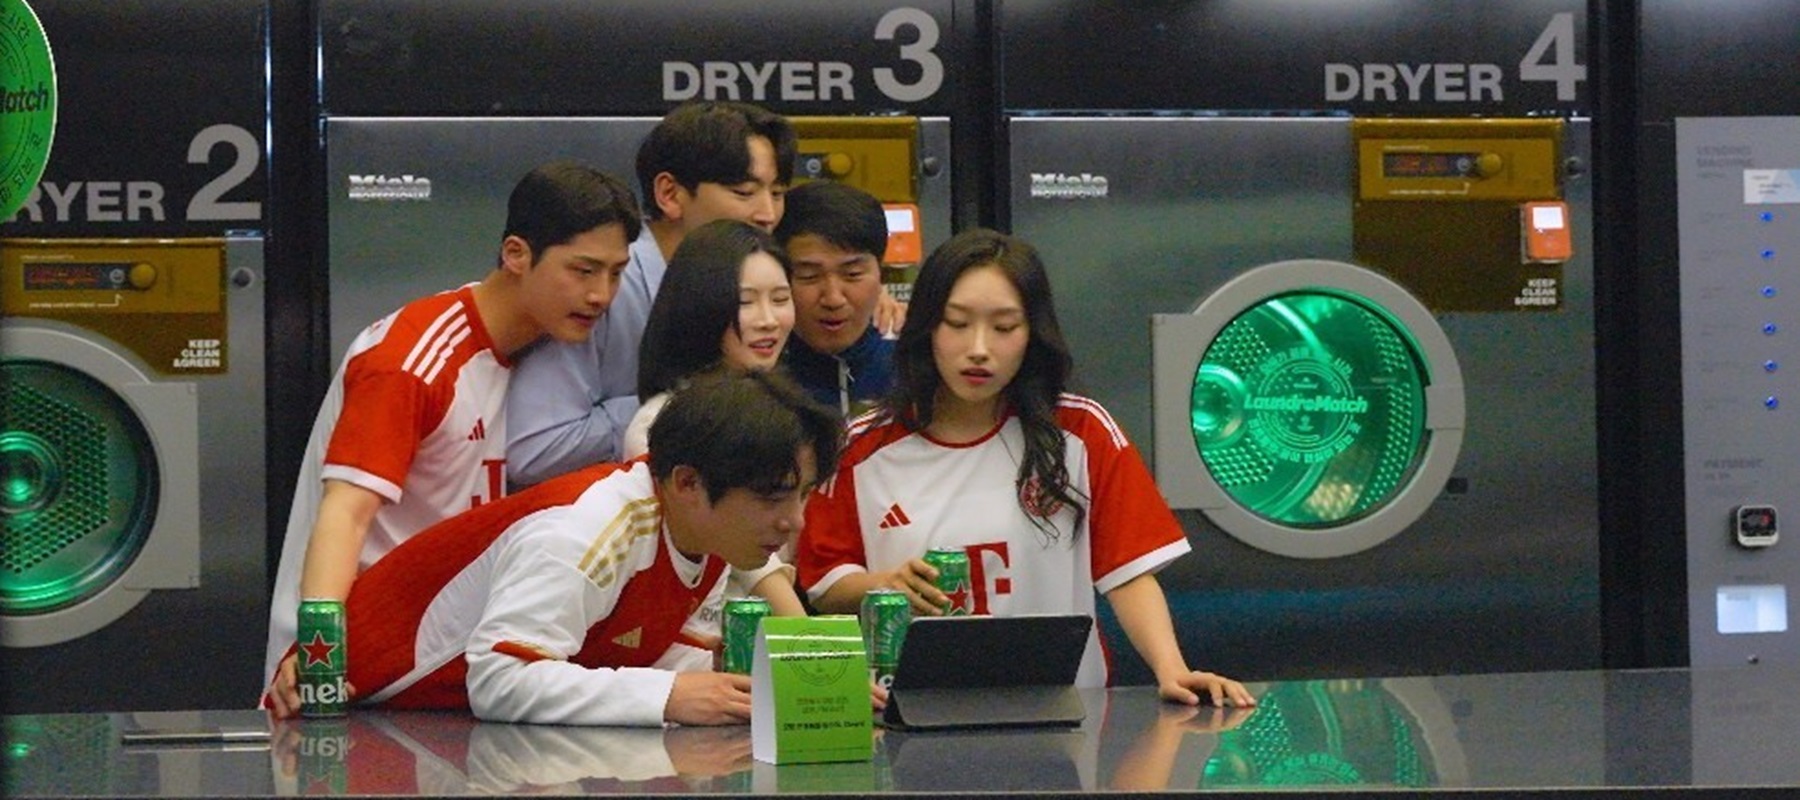 Heineken transforms laundromats into 24-hour sports bars targeting South Korean football fans